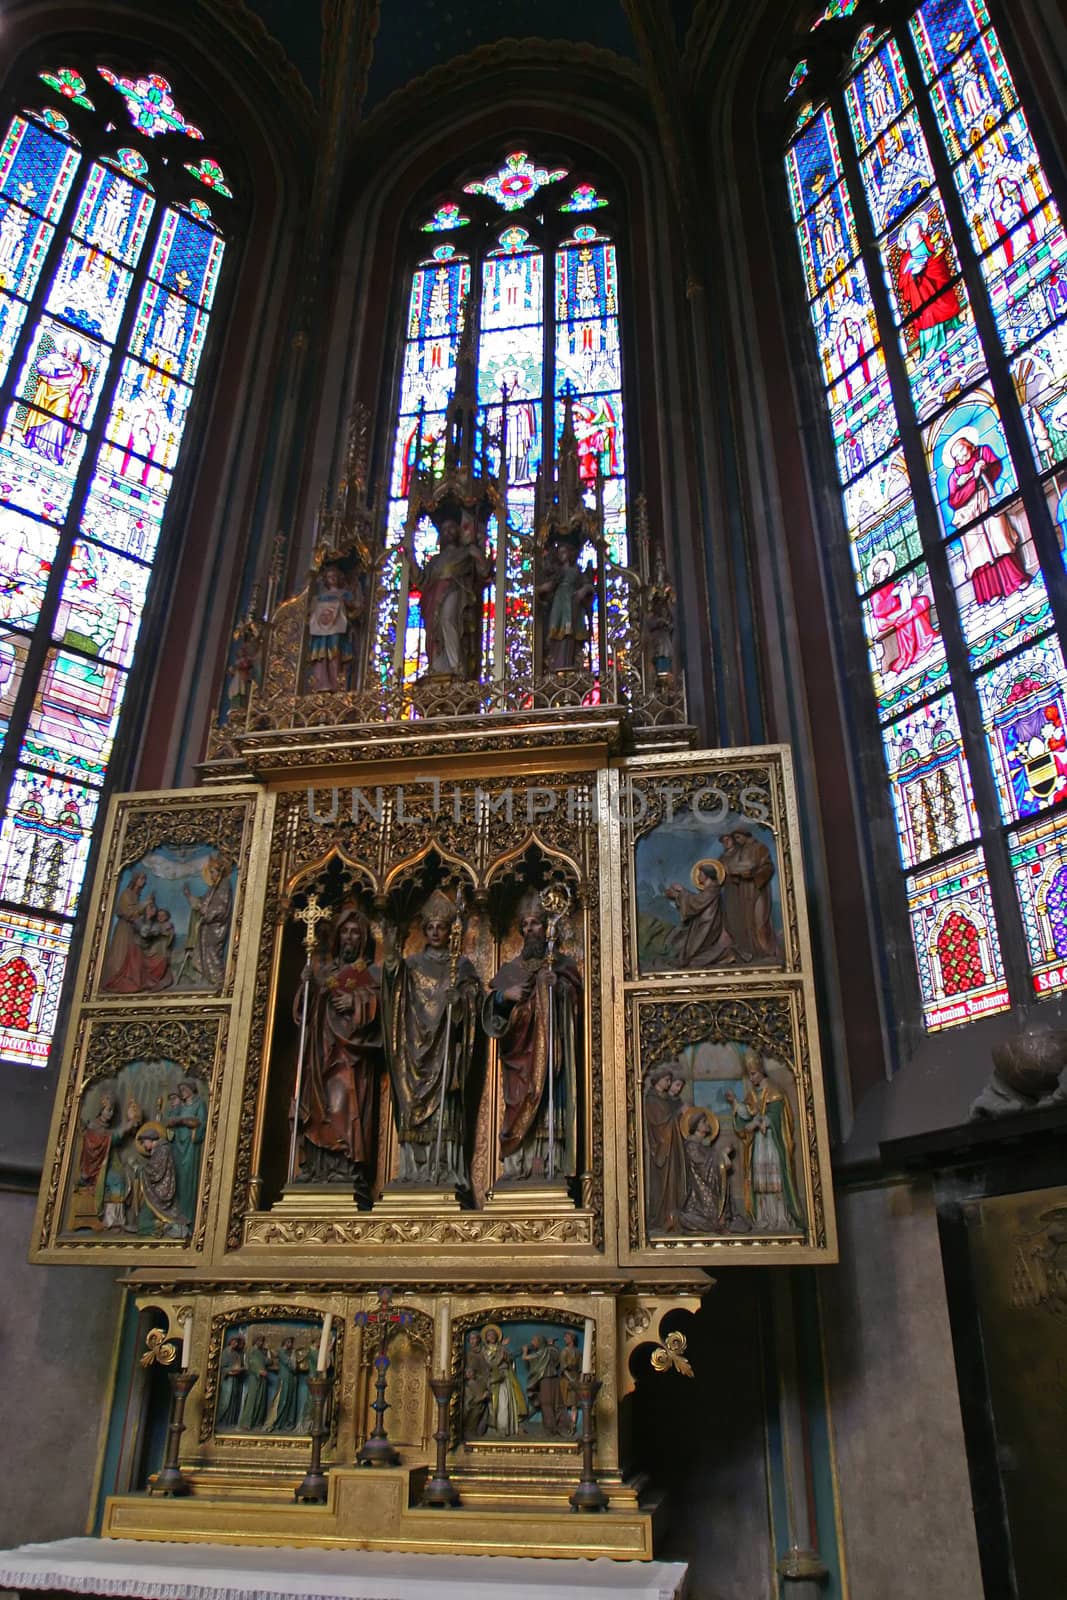 St Vitus interiors by LoonChild